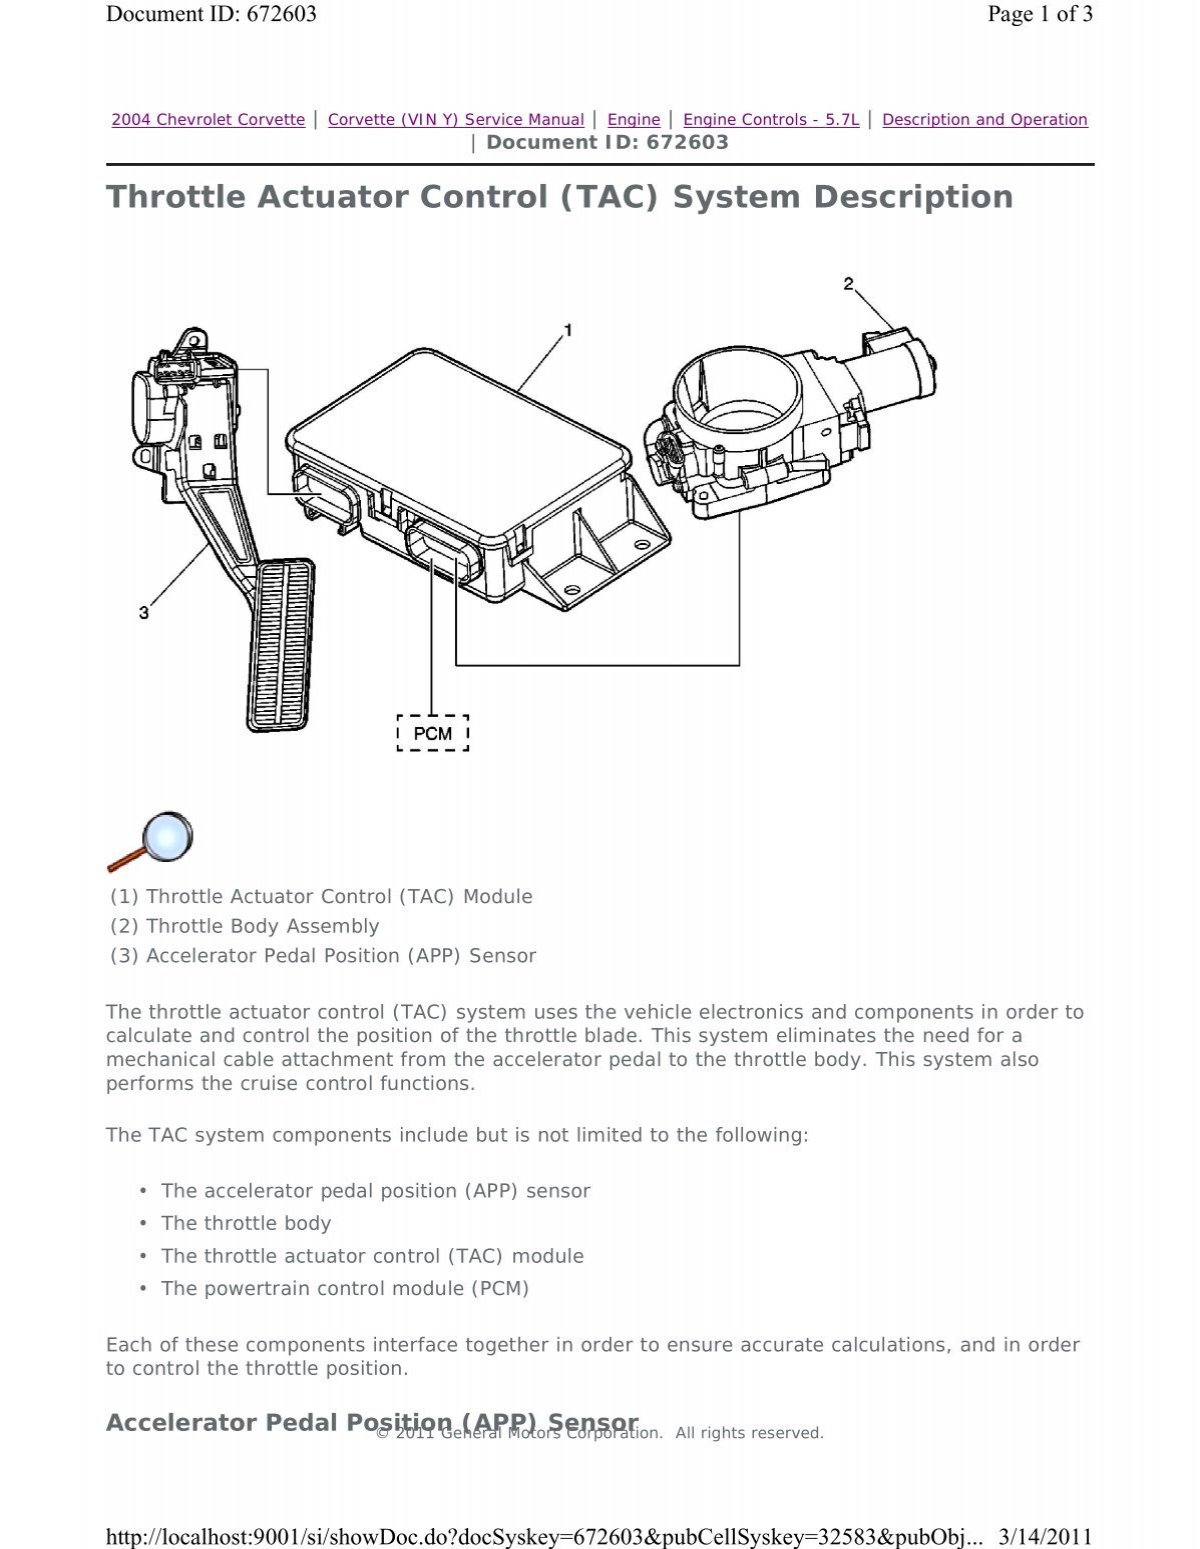 throttle actuator control tac system description ls2 com throttle actuator control tac system